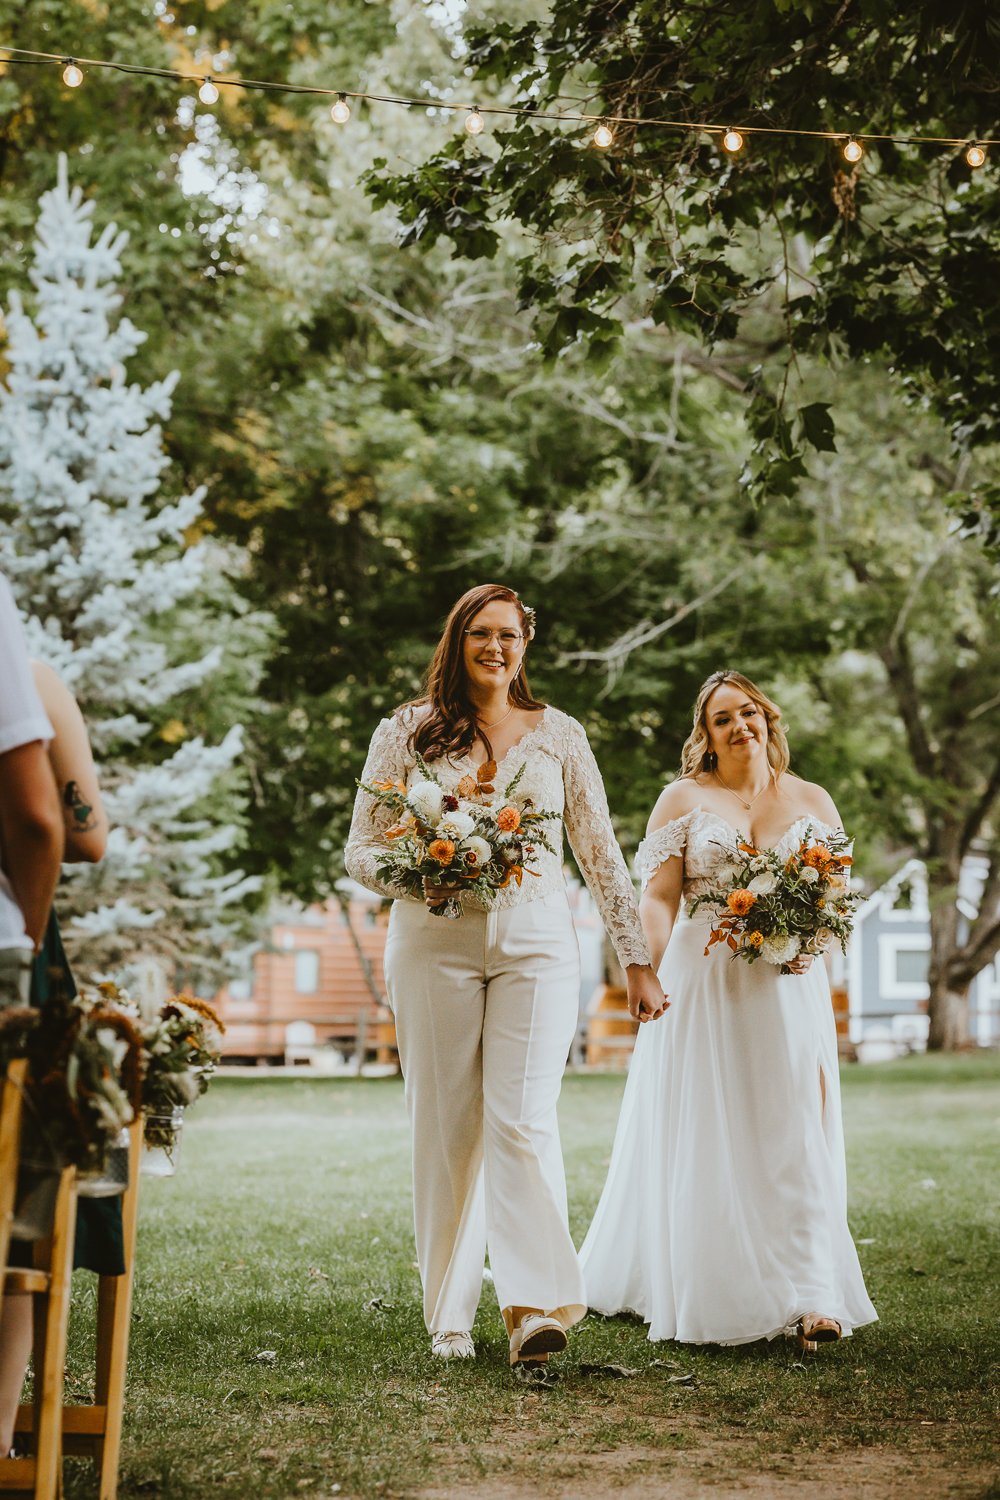 Plume&Furrow-Wedding-FLorist-Kennedy&Jena-IvyBencheckPortraits-River-Bend-LGBTQ-September-Colorado-Brides-Down-Aisle-Flowers.jpg